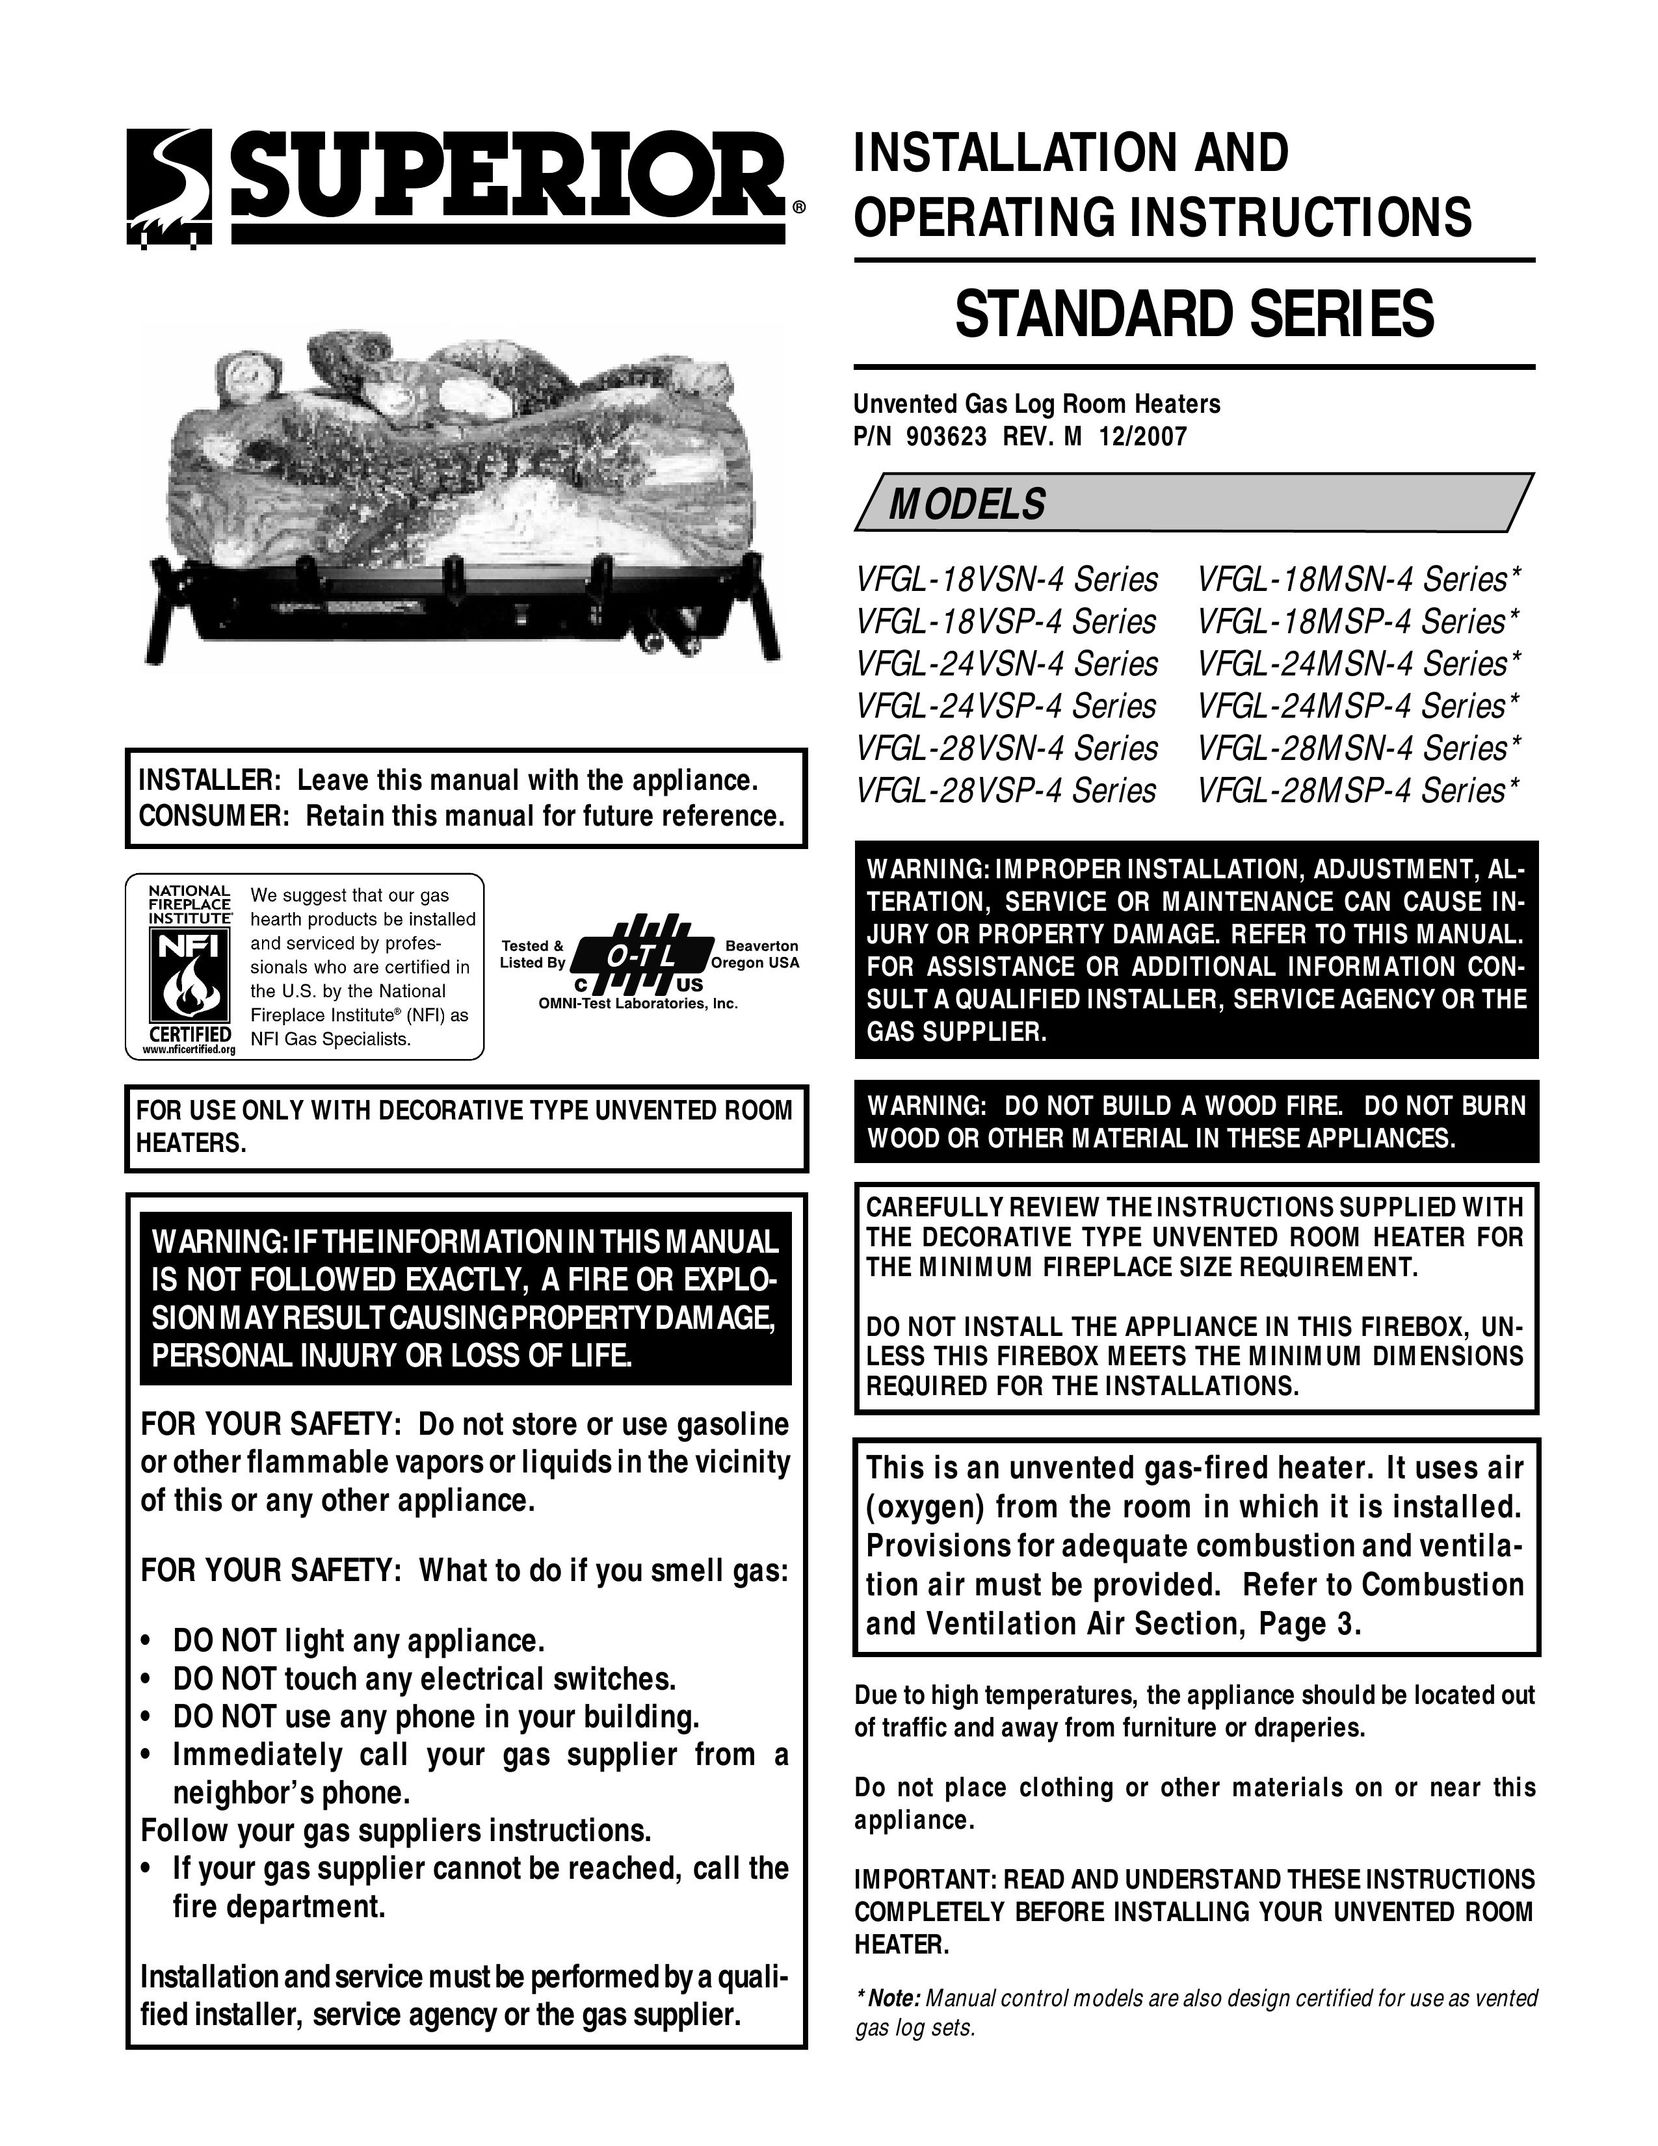 Superior VFGL-28MSN-4 SERIES* Gas Heater User Manual